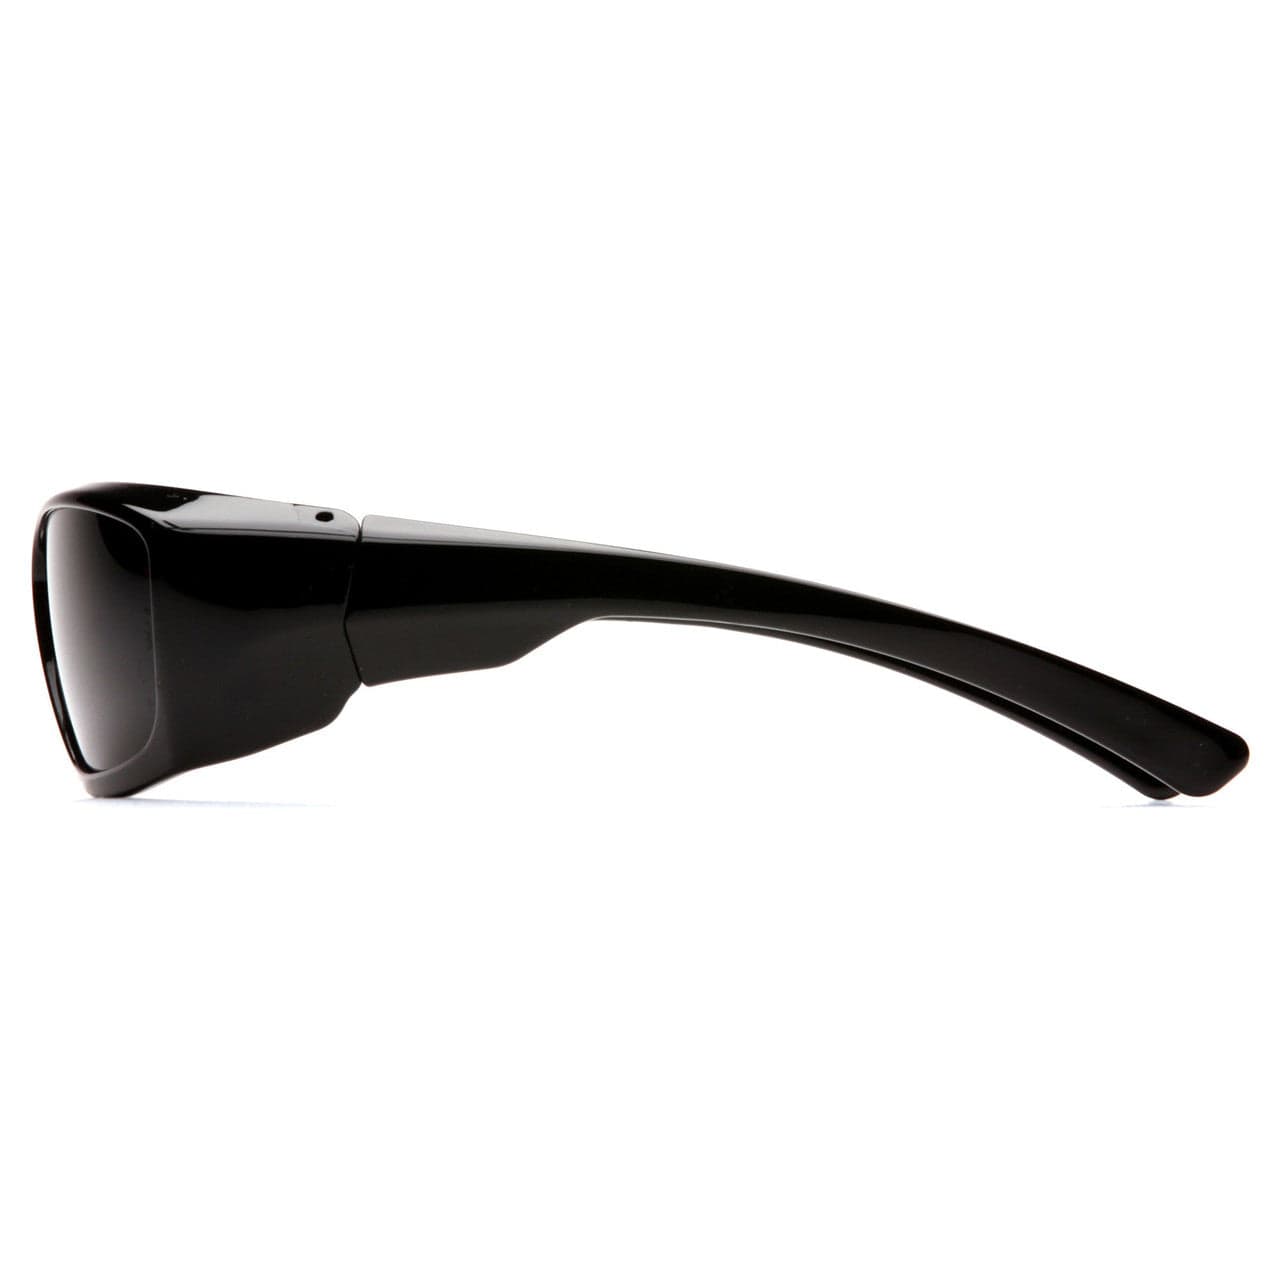 Pyramex Emerge Safety Glasses Black Frame IR Shade 5.0 Lens SB7950SF Side